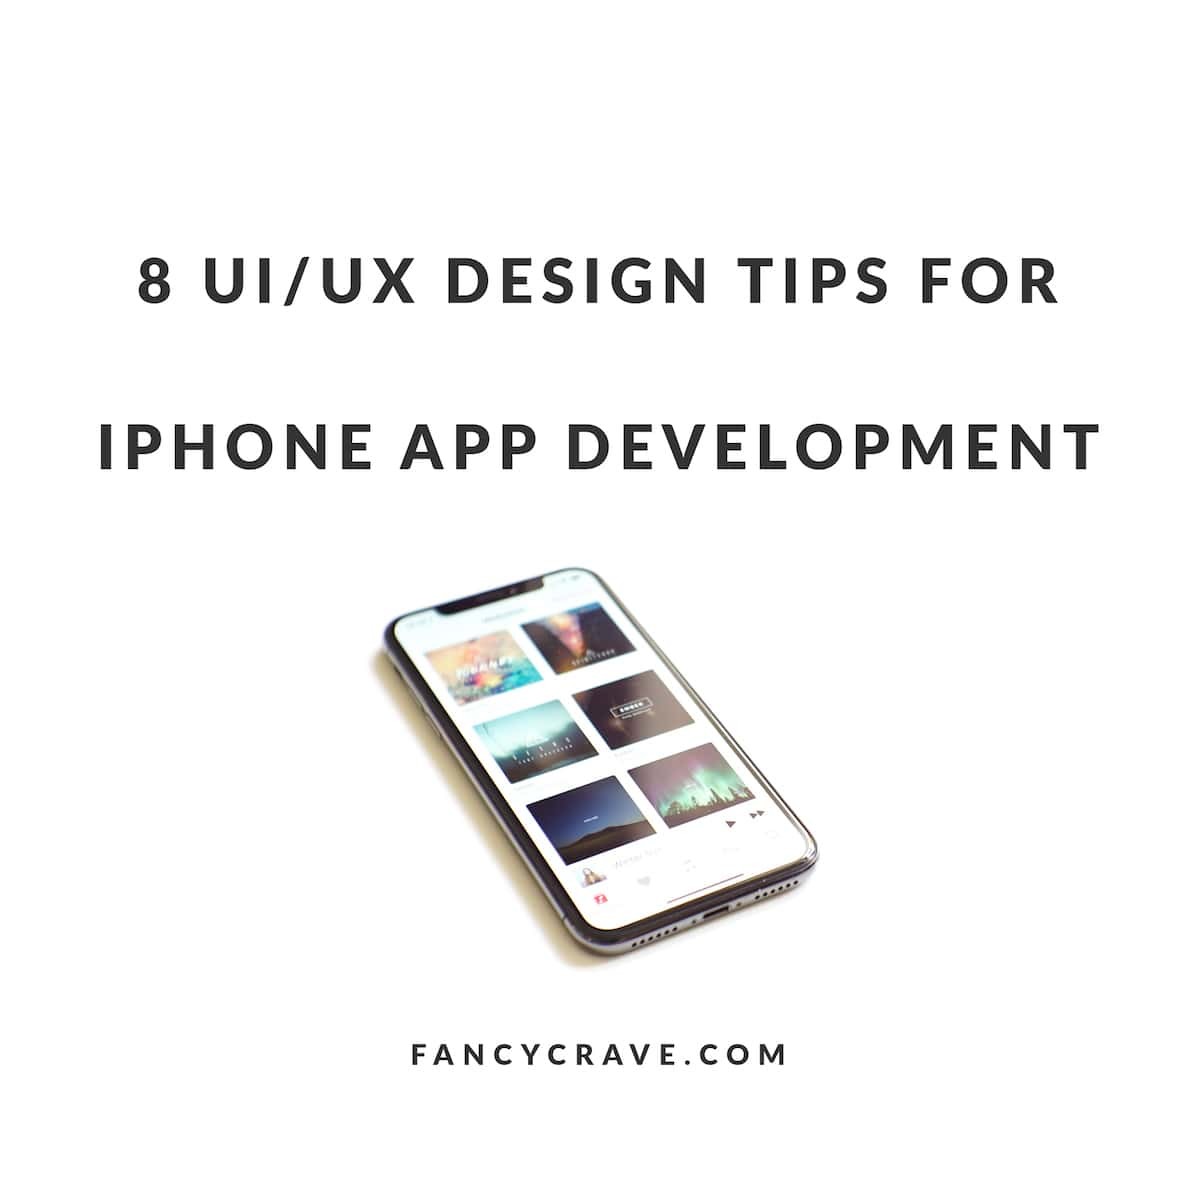 Design Tips for iPhone App Development